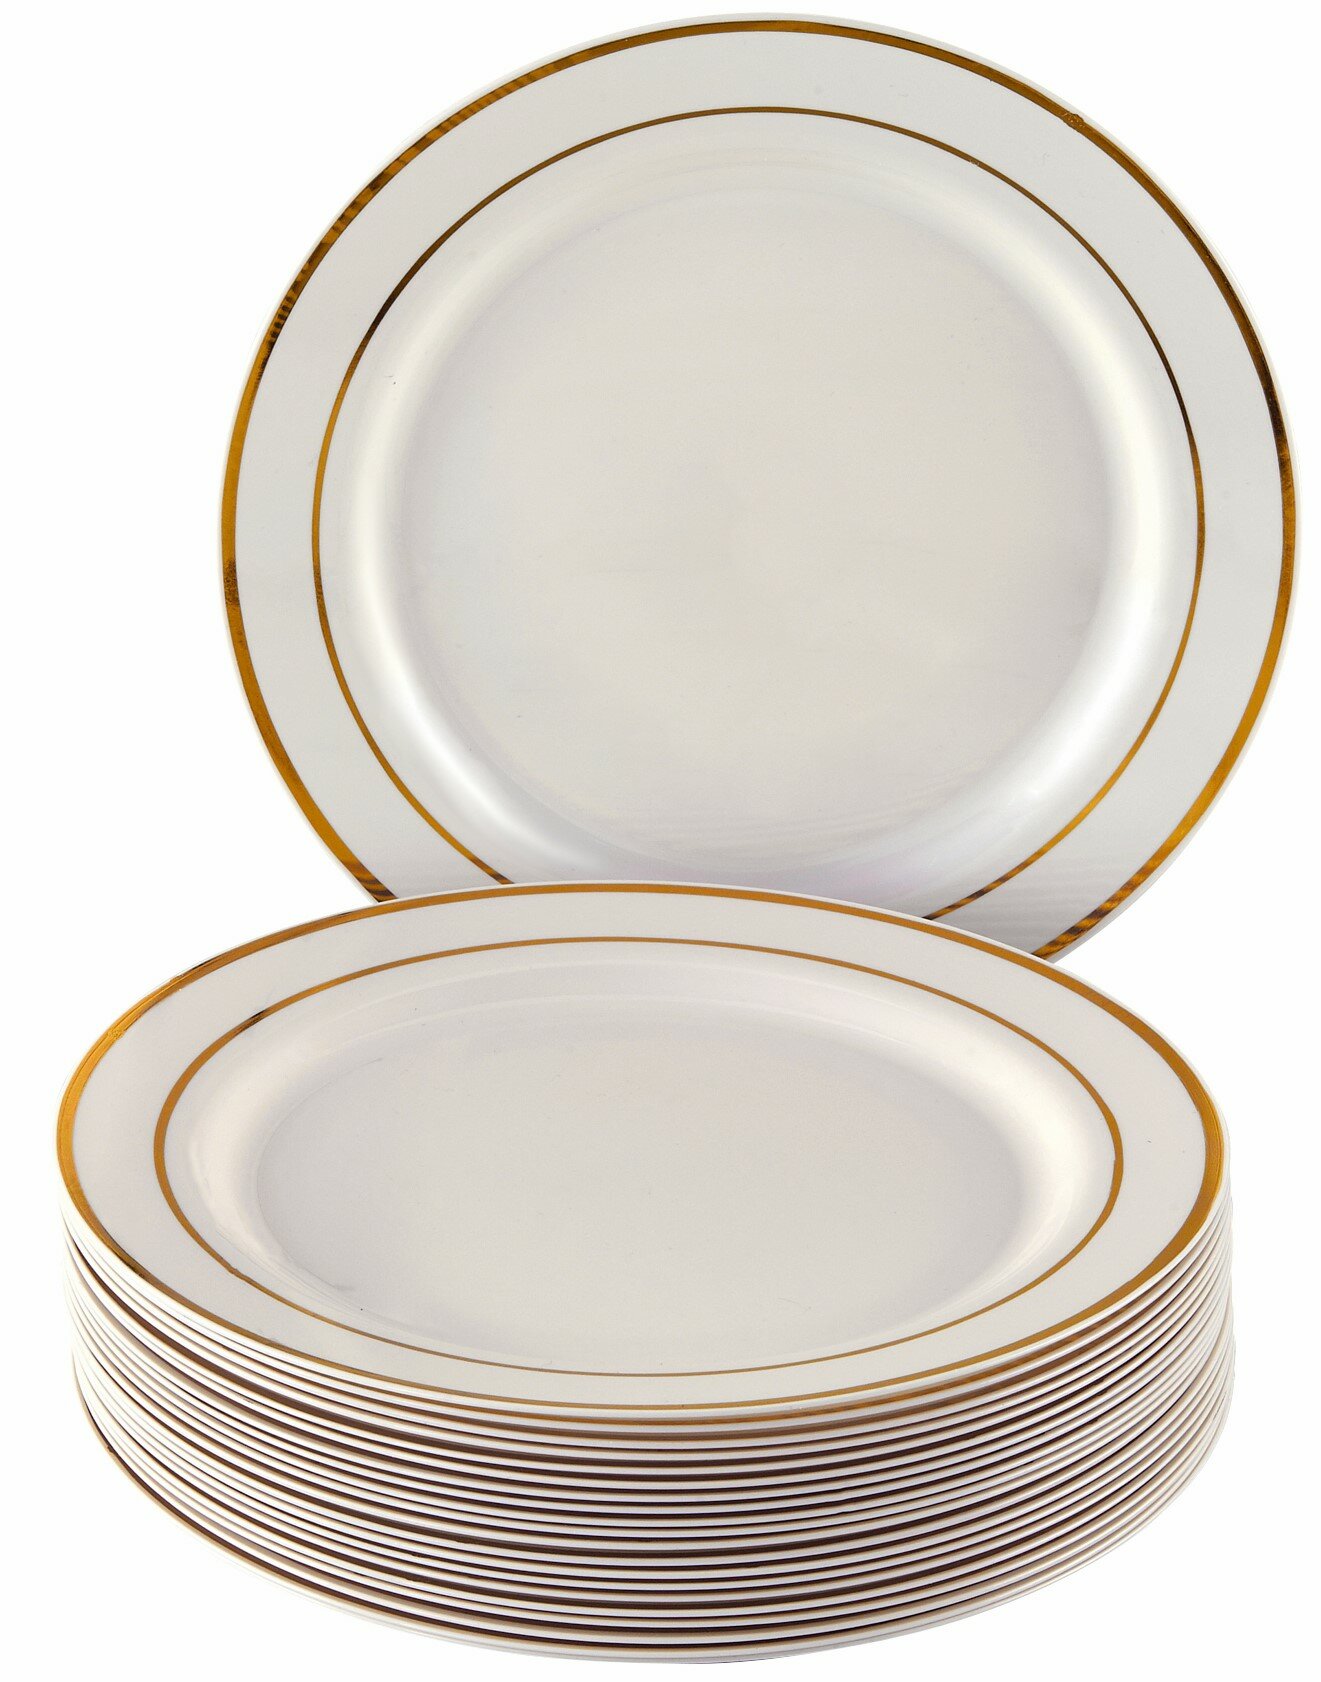 100pcss Disposable Party Plates Heavy Duty Eco - Friendly Sturdy Appetizer  Plates, Paper Plates